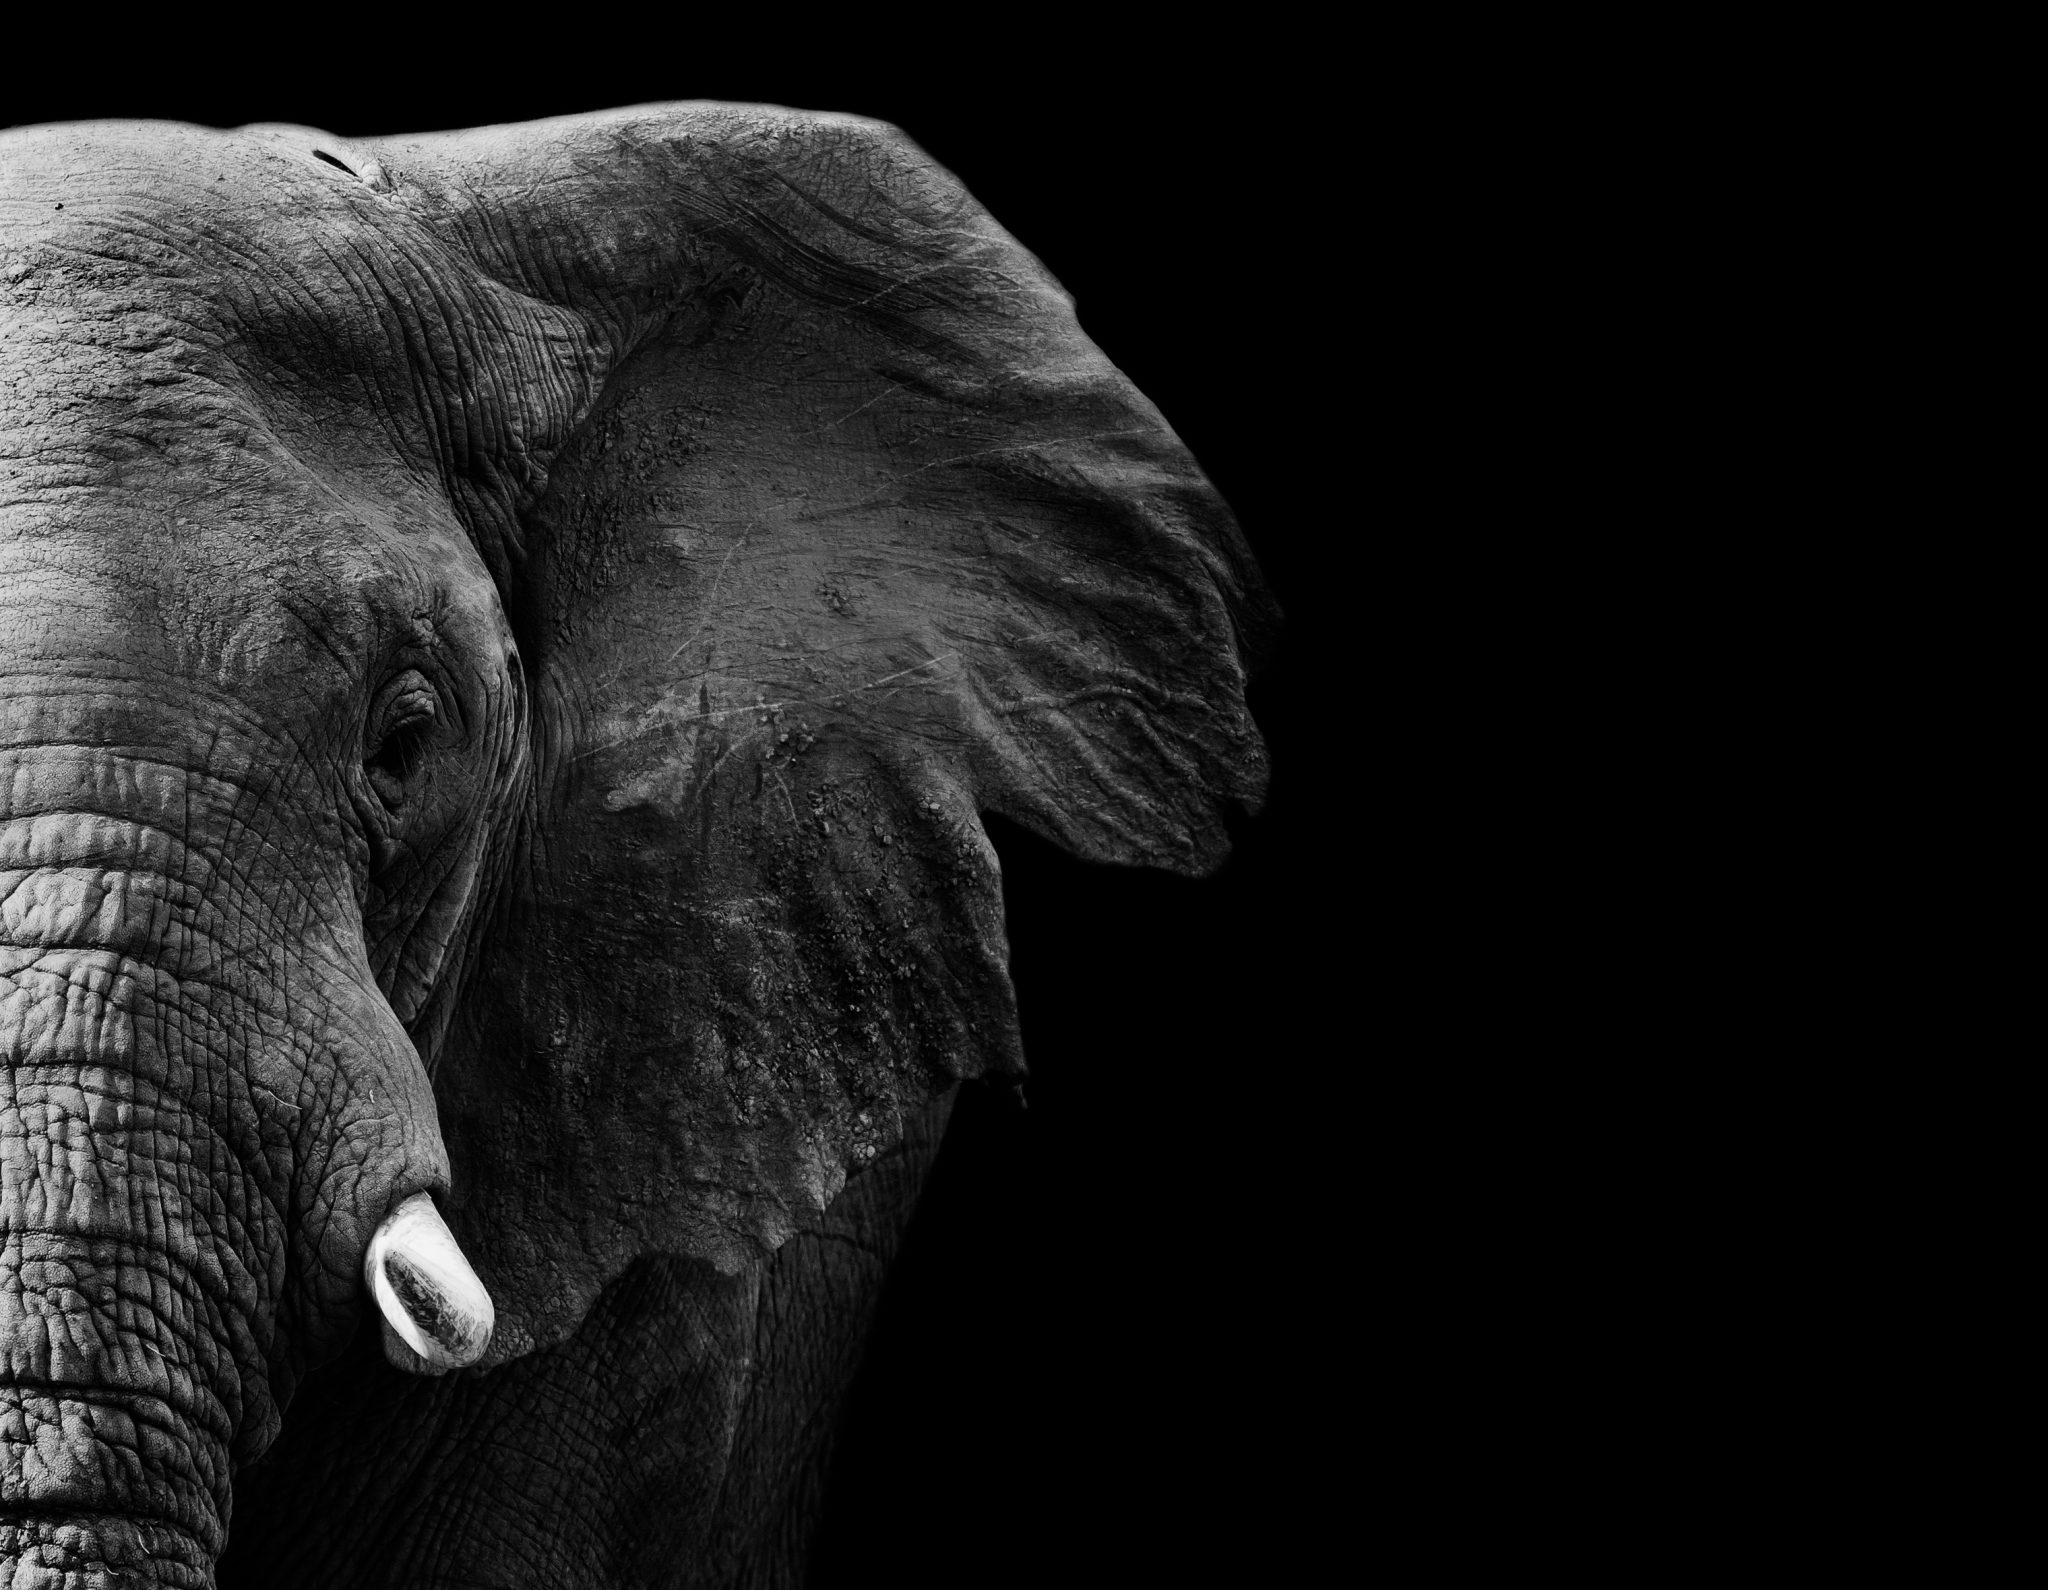 Слон на заставку телефона. Слон на черном фоне. Черный слон. Заставка слон. Картина слона на черном фоне.